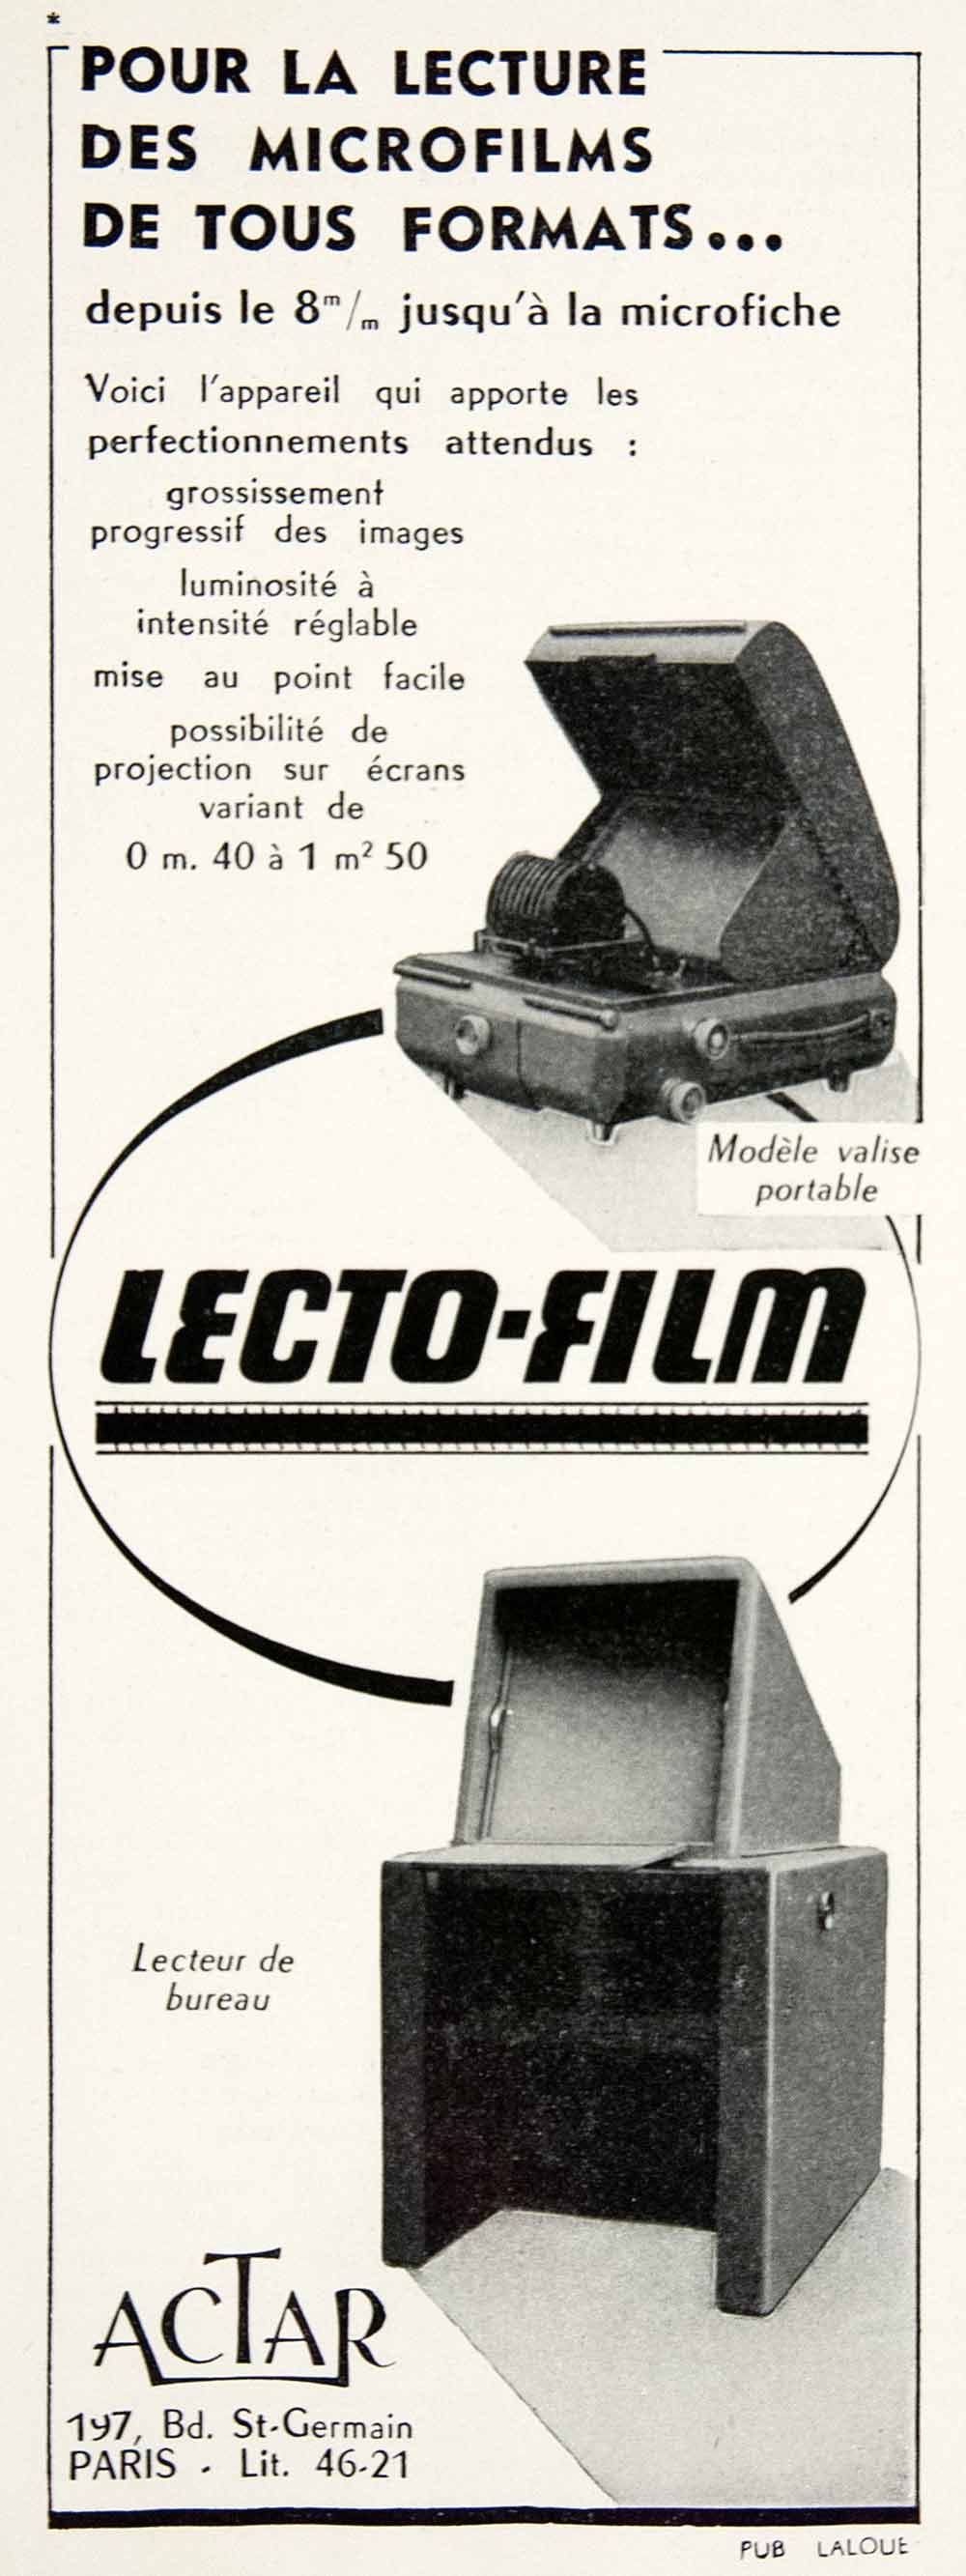 1953 Ad Actar Lecto-Film Microfilm Viewer 197 Blvd St Germain Paris French VEN8